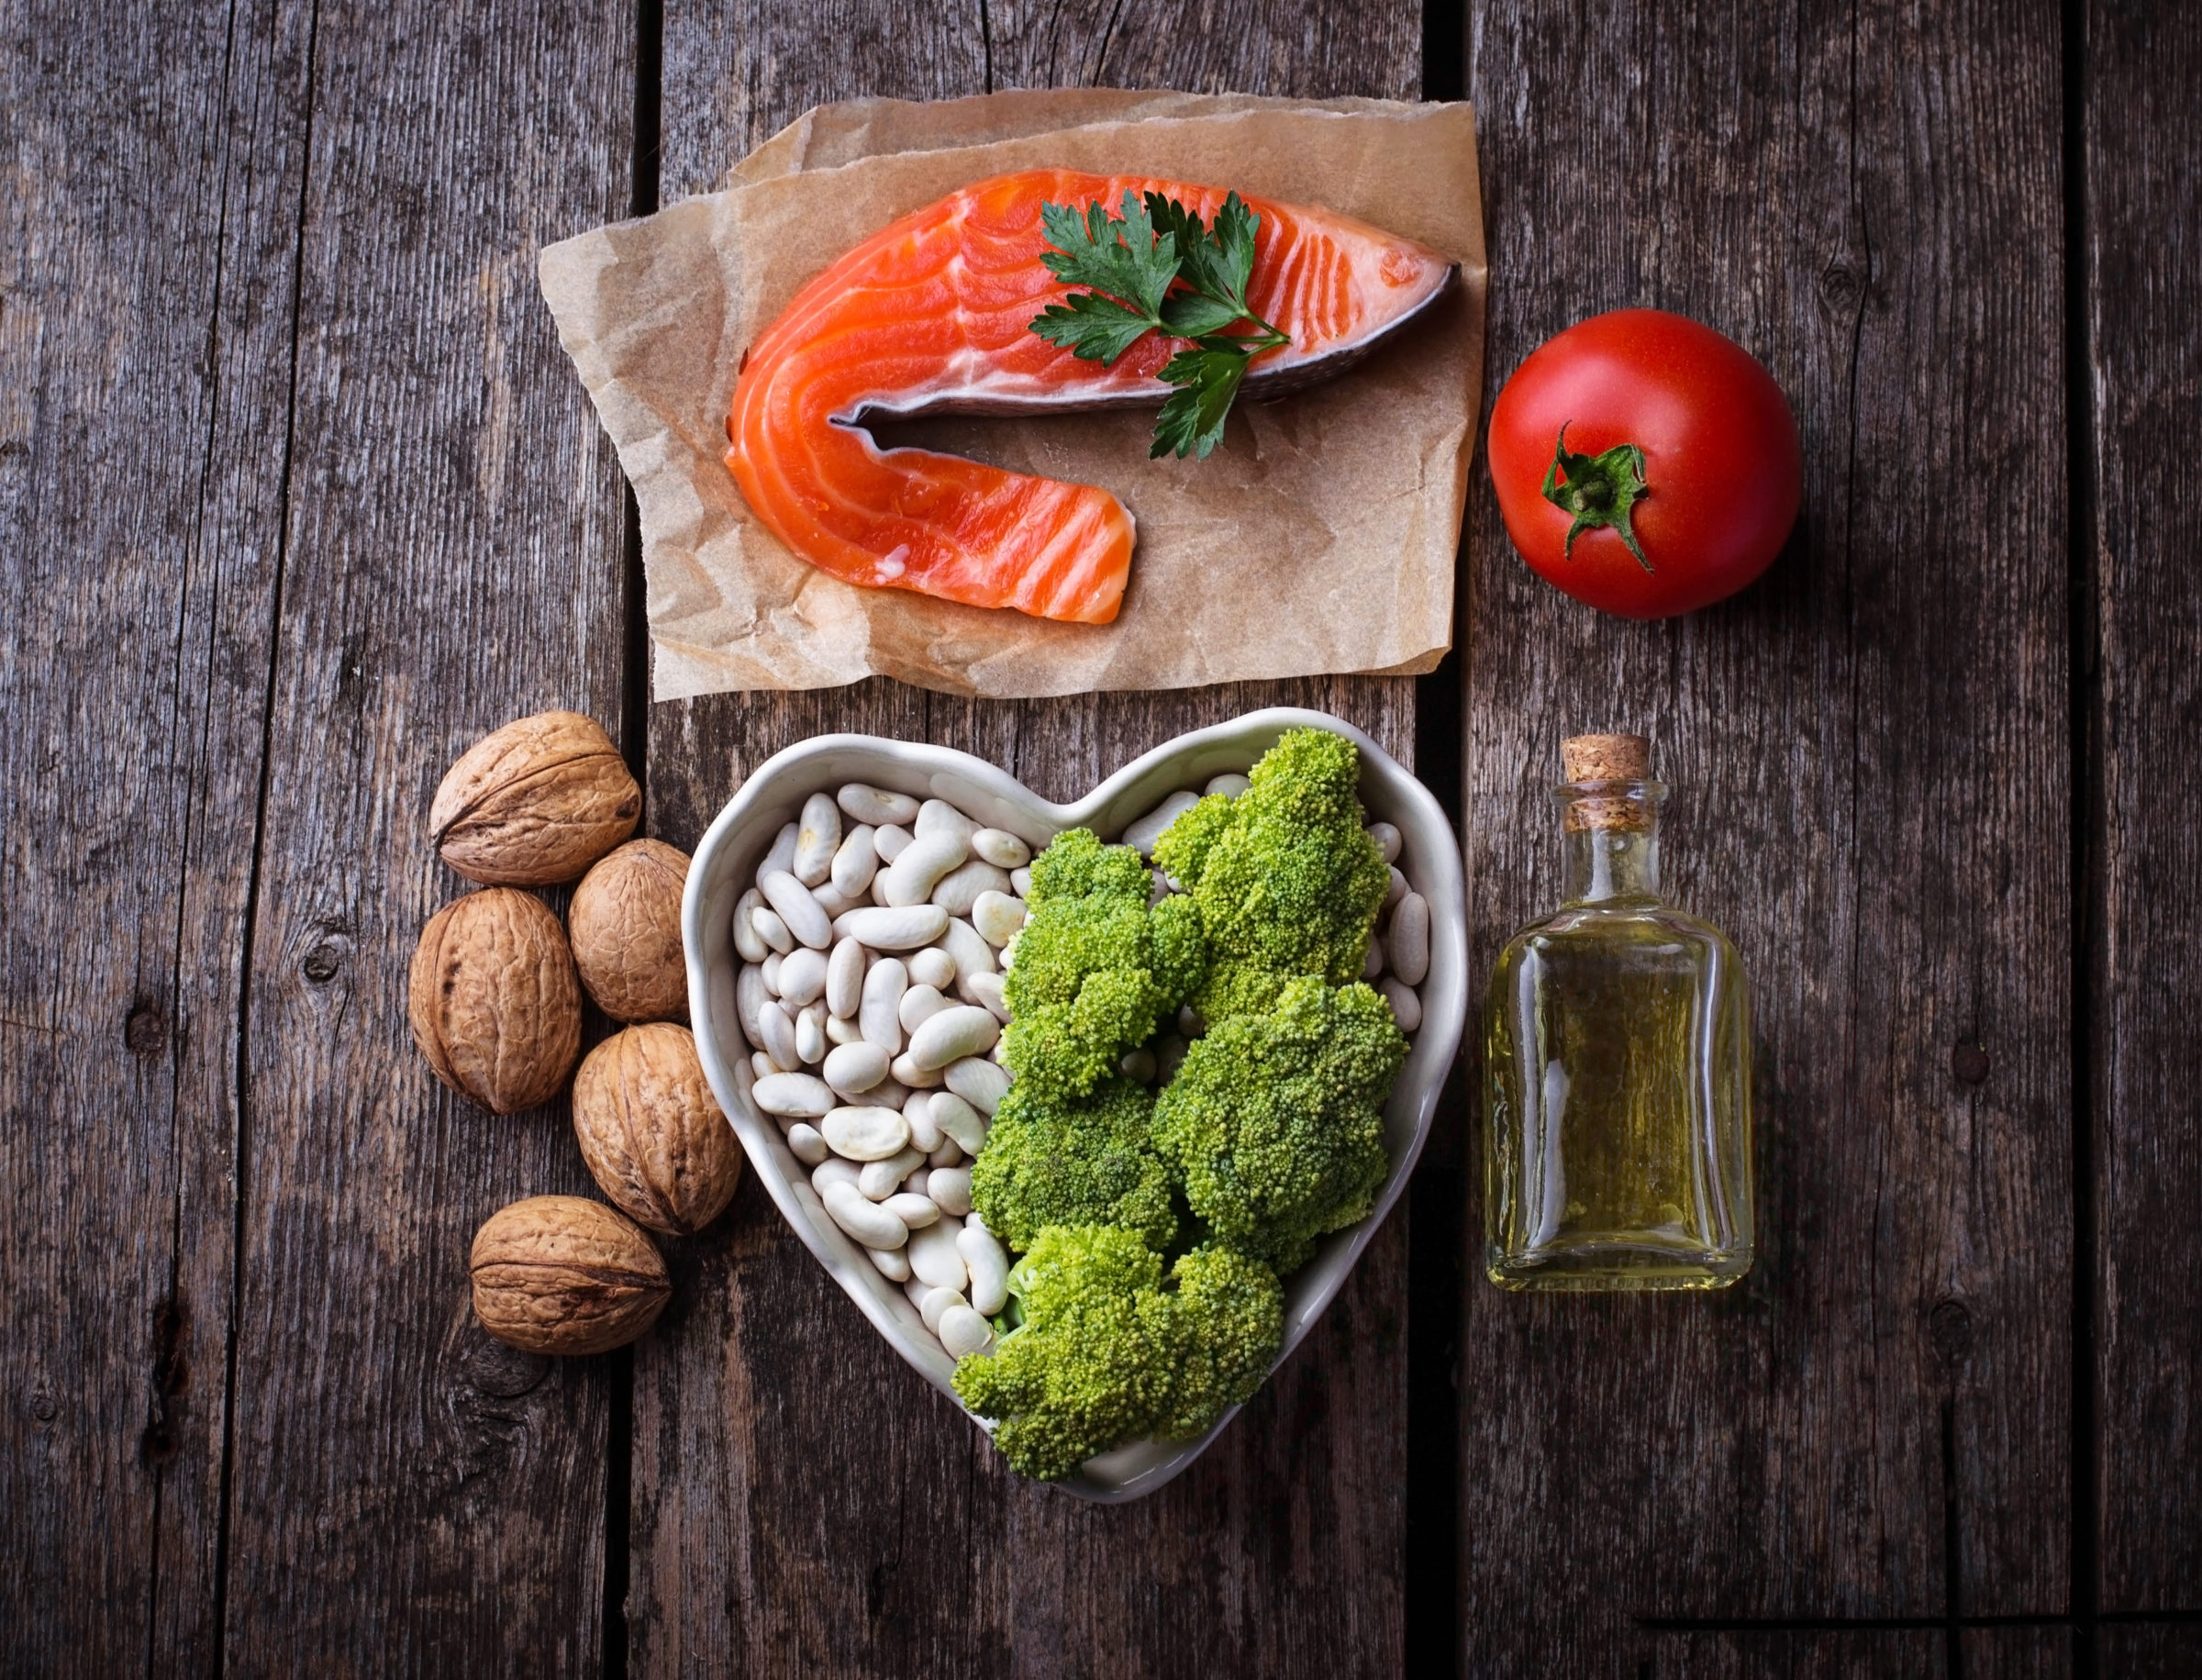 cholesterol diet healthy food for heart 2021 08 26 19 01 38 utc